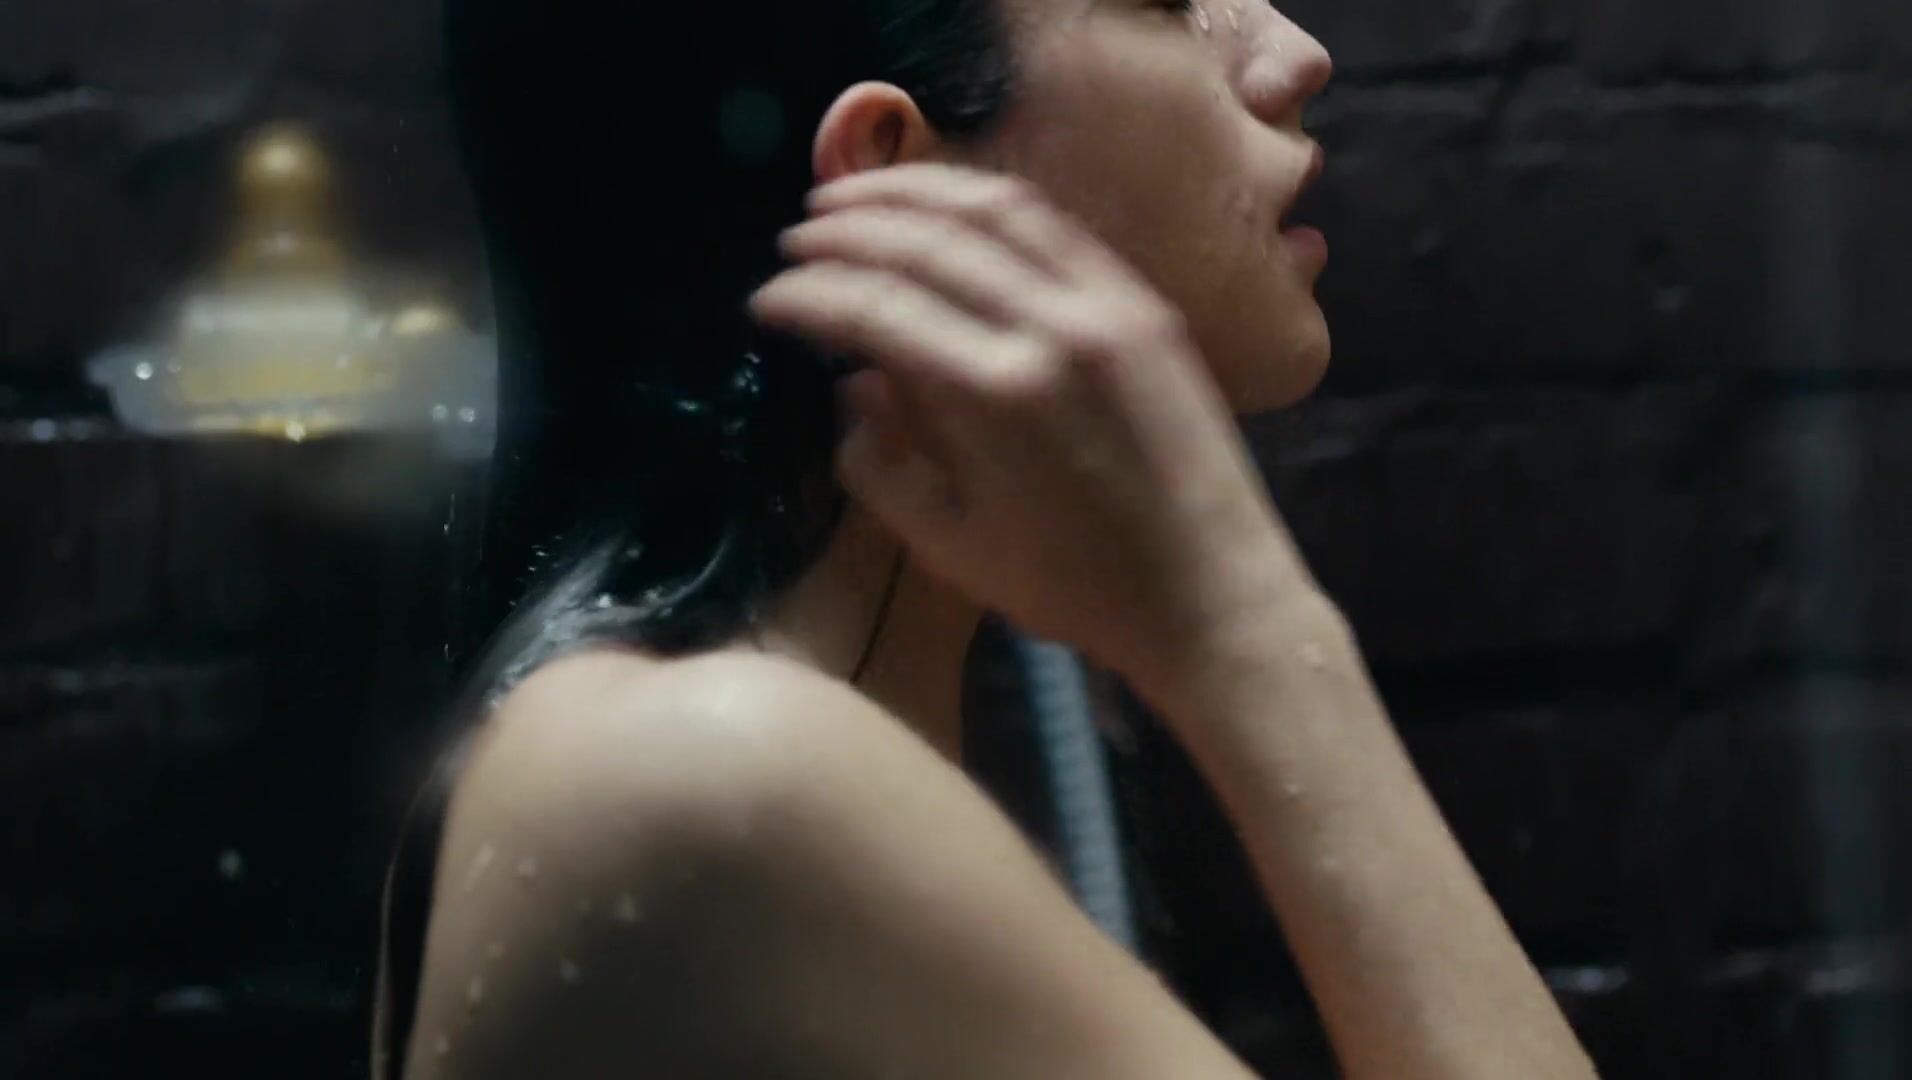 Blackcocks Teen Anna Chipovskaya nude in nude scene from Russian drama movie Pure Art (2016) Pinay